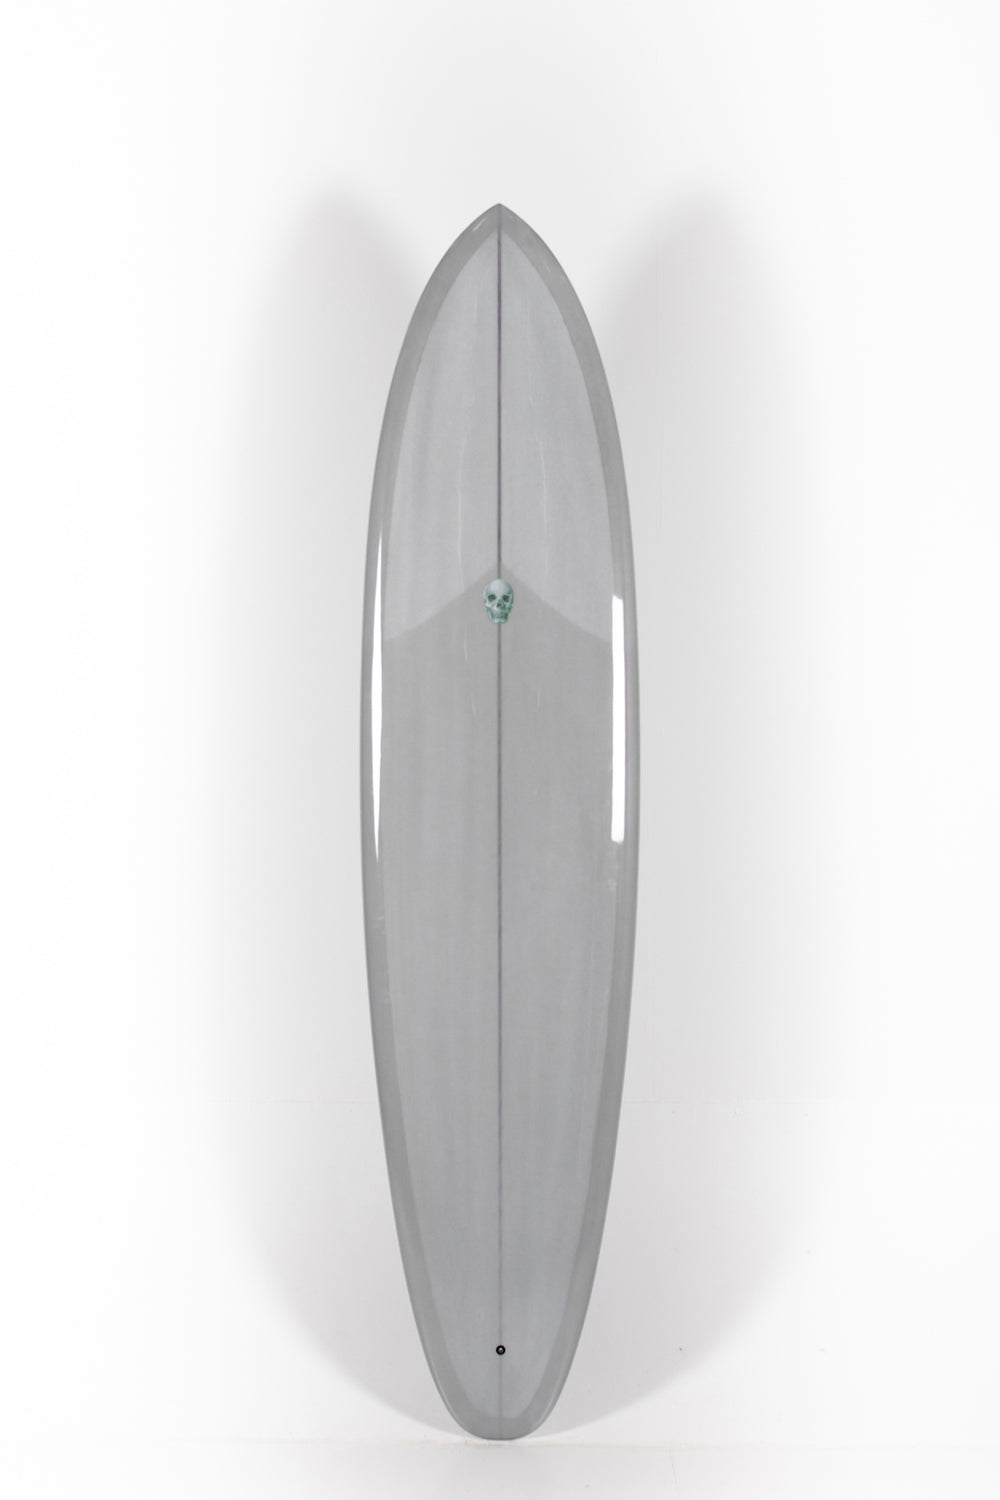 Pukas Surf Shop - Christenson Surfboards - FLAT TRACKER 2.0 - 7'8